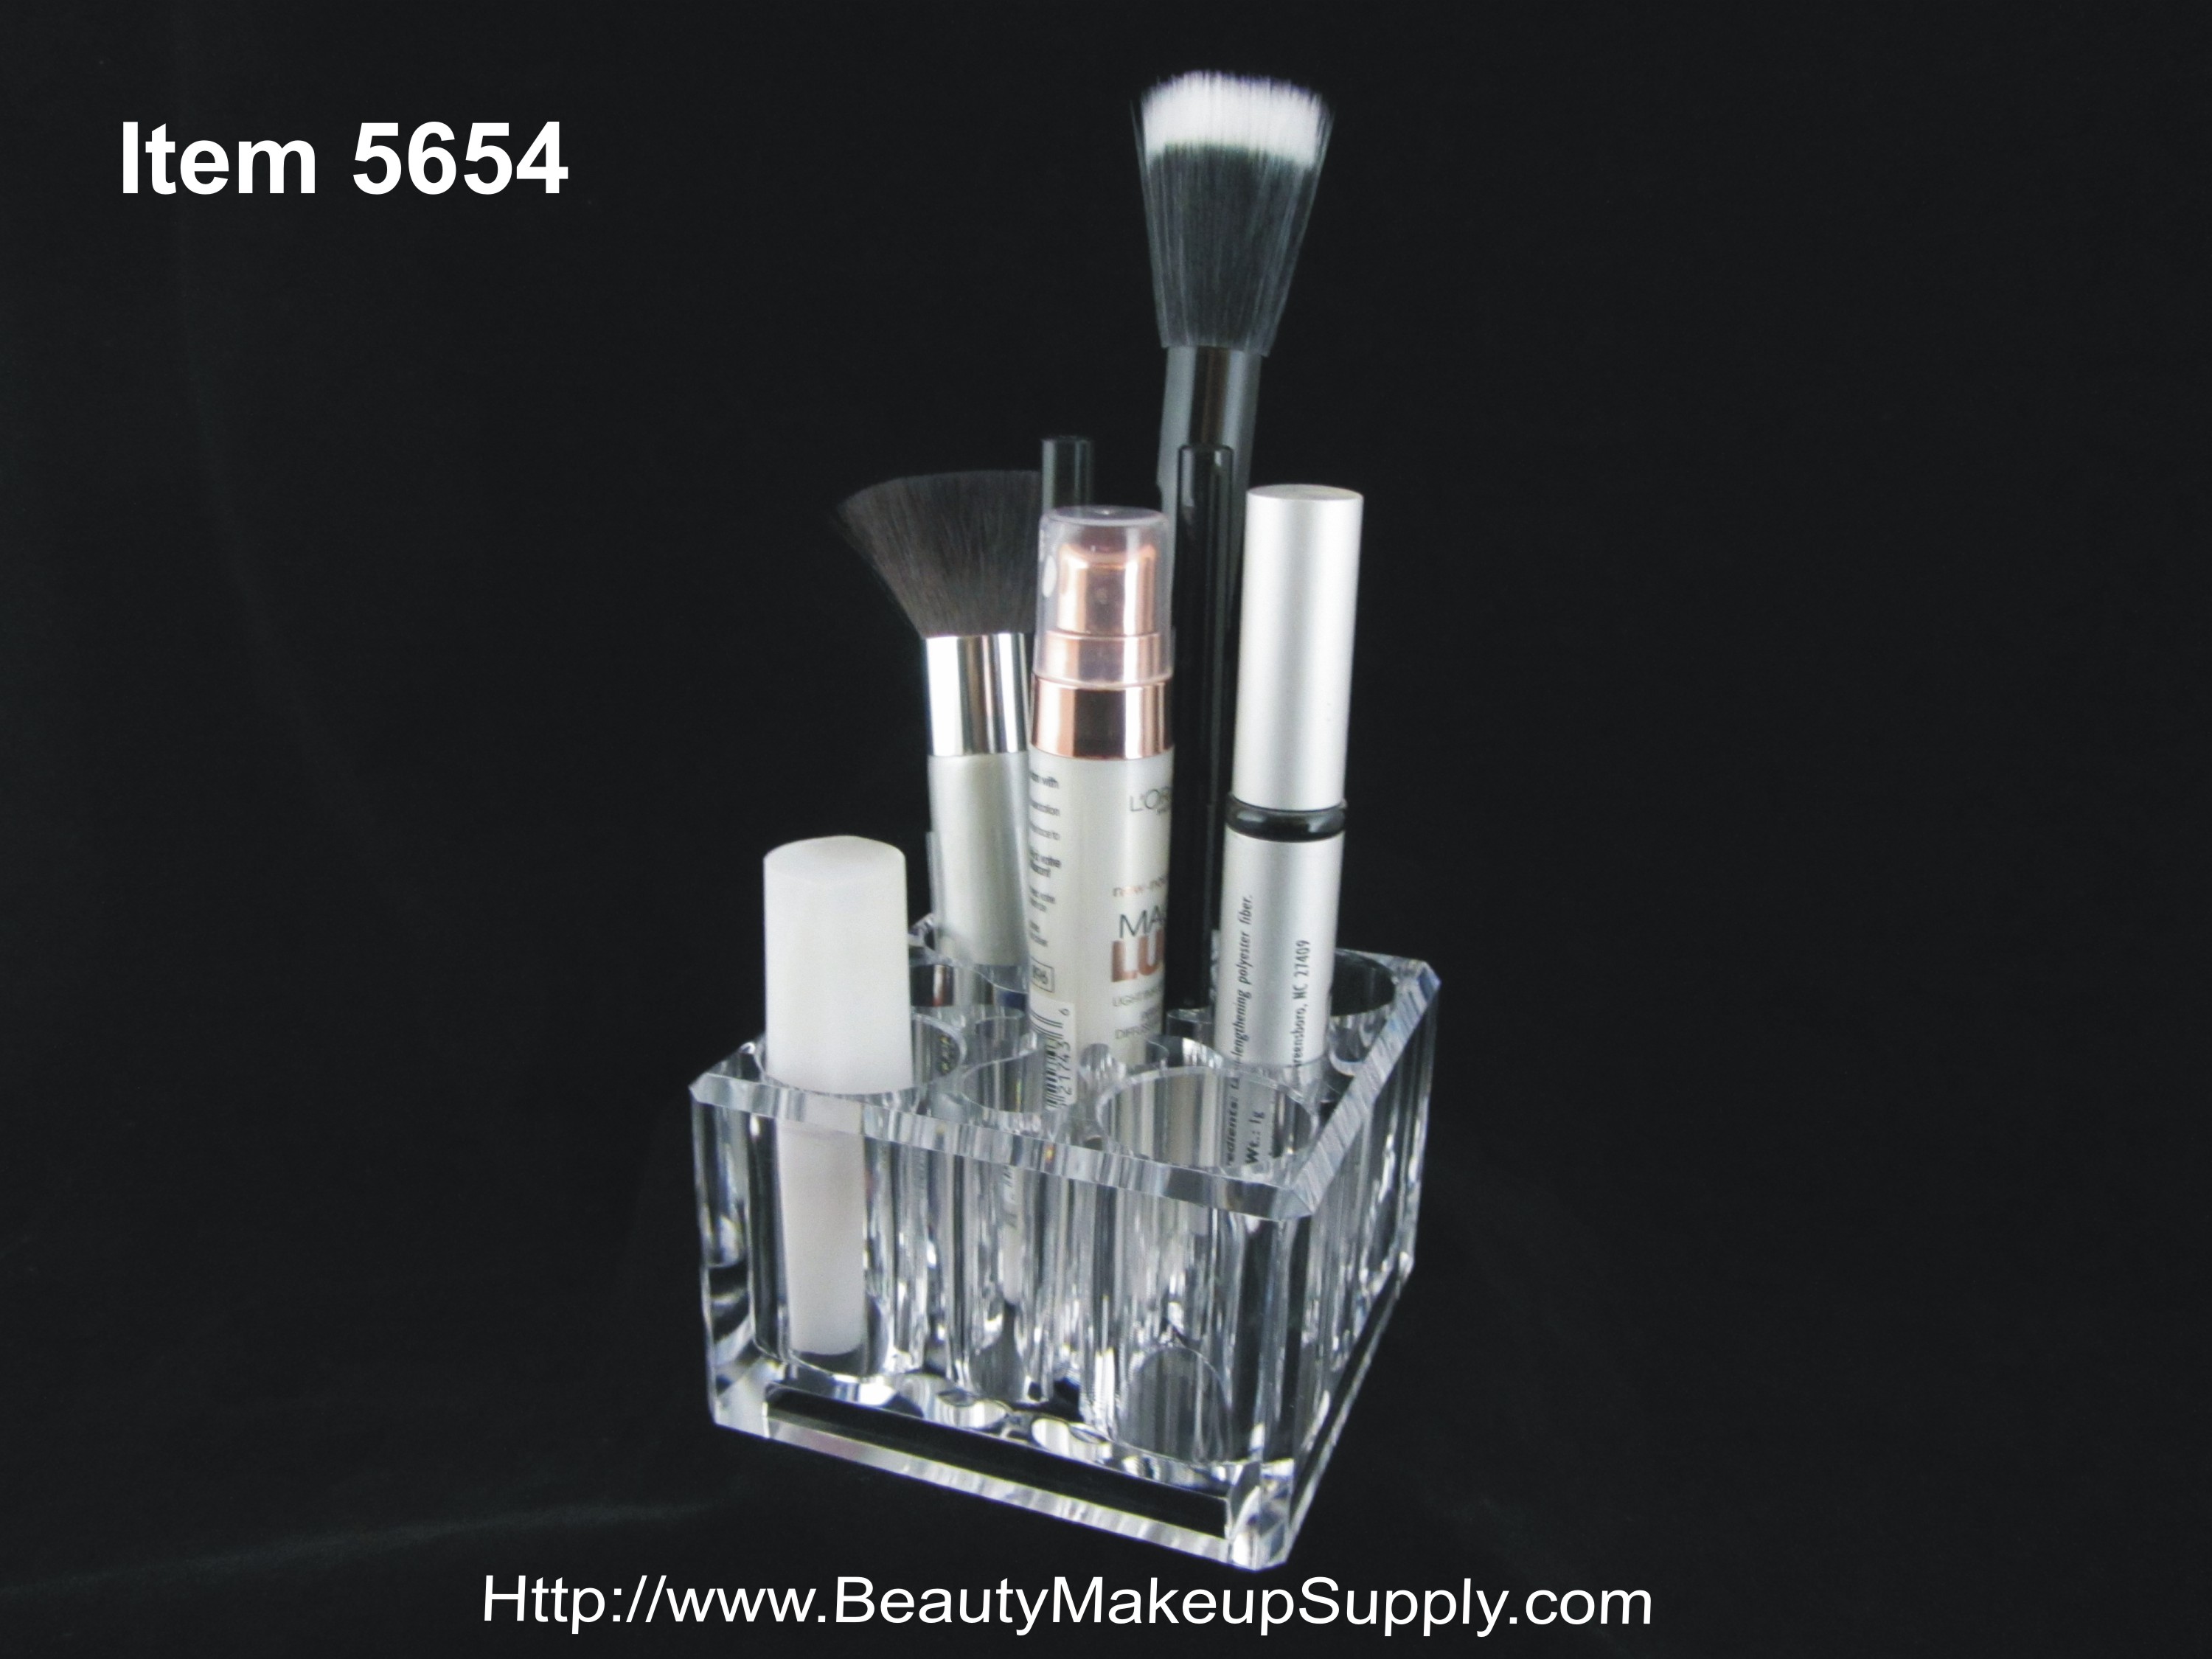 Acrylic Cosmetic Organizer Luxury Square Makeup Holder - sku# 5654